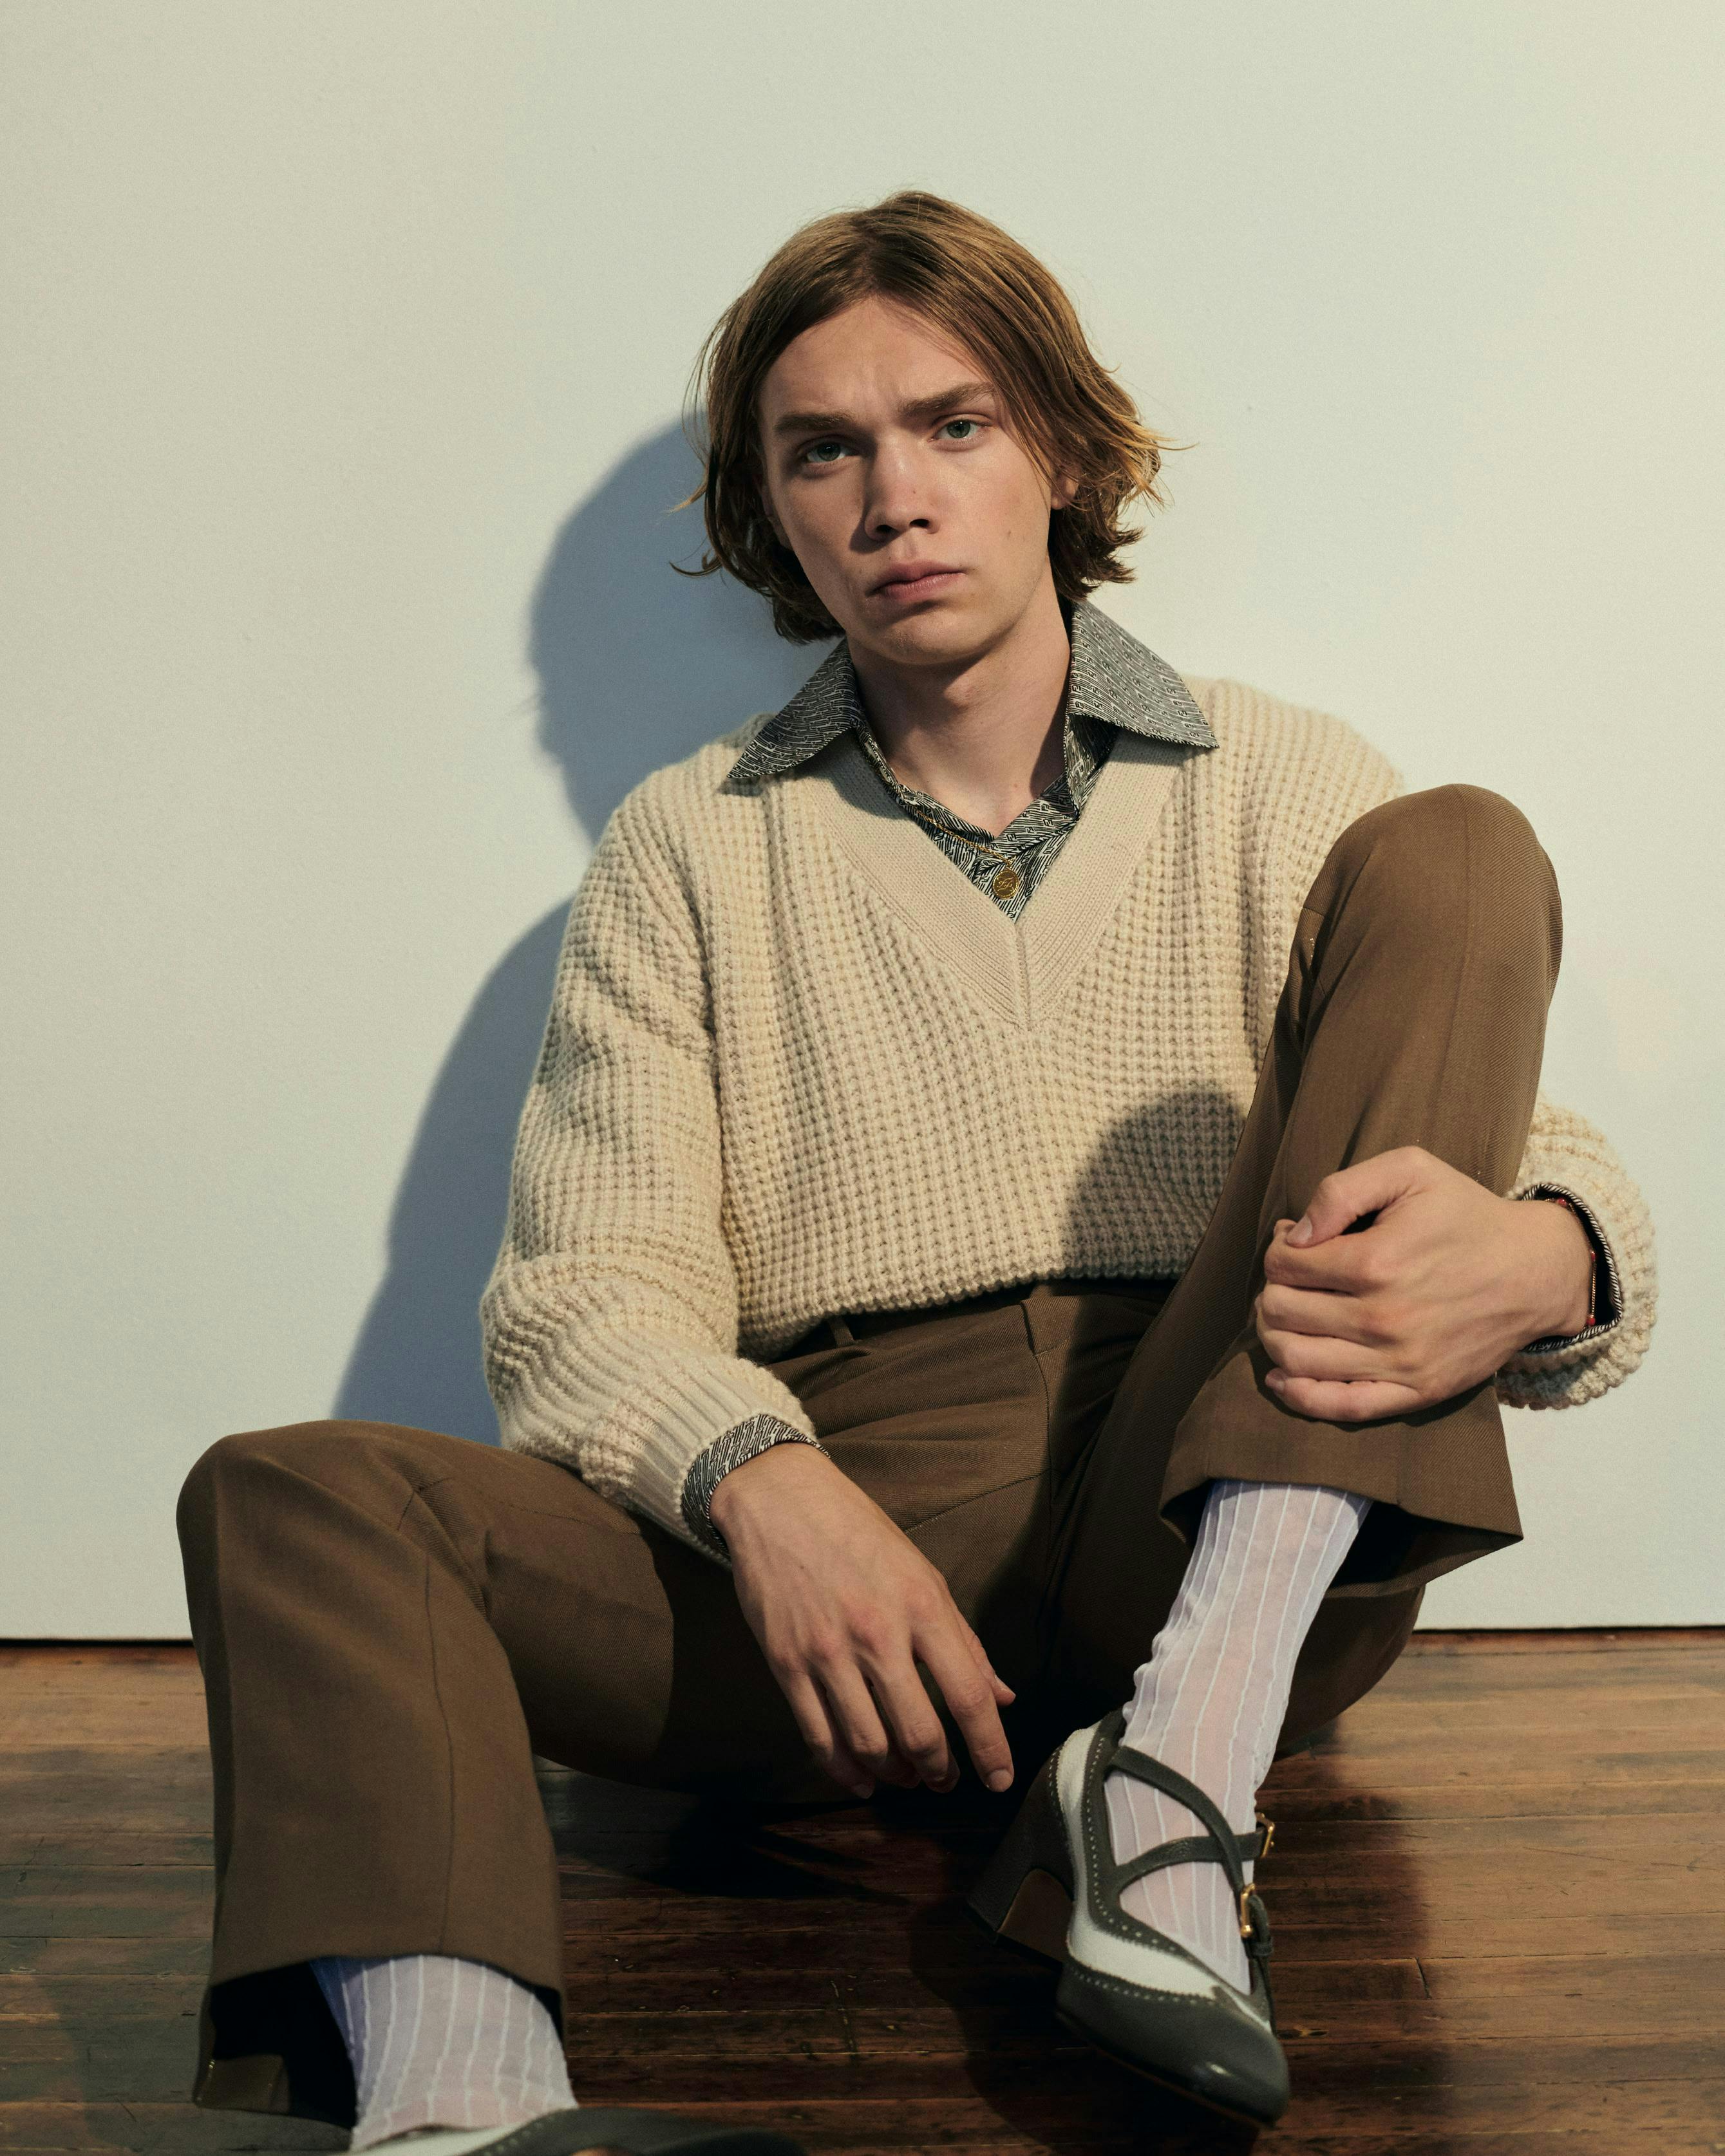 clothing apparel sweater person human footwear wood sleeve